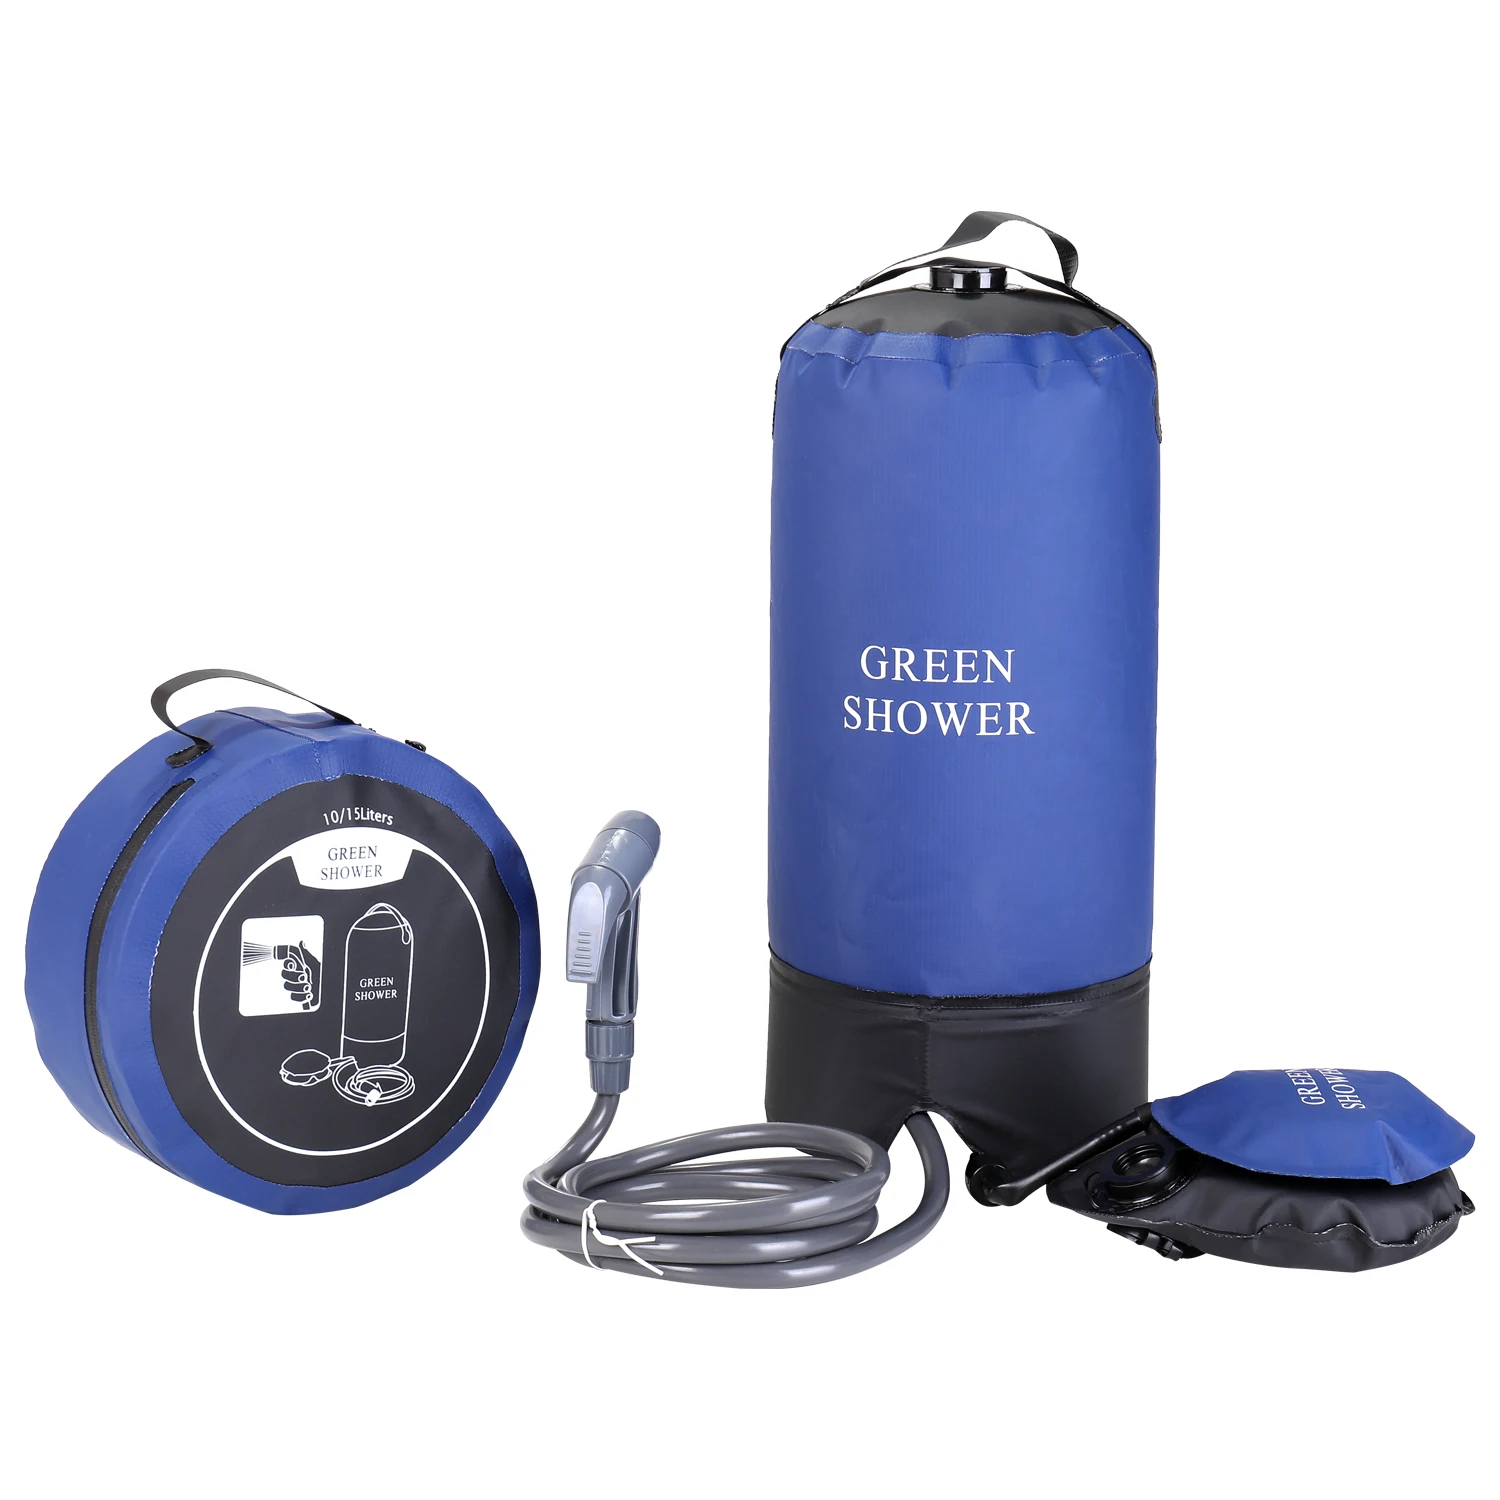 Lever Bucket Pump for 5 Gallon Buckets